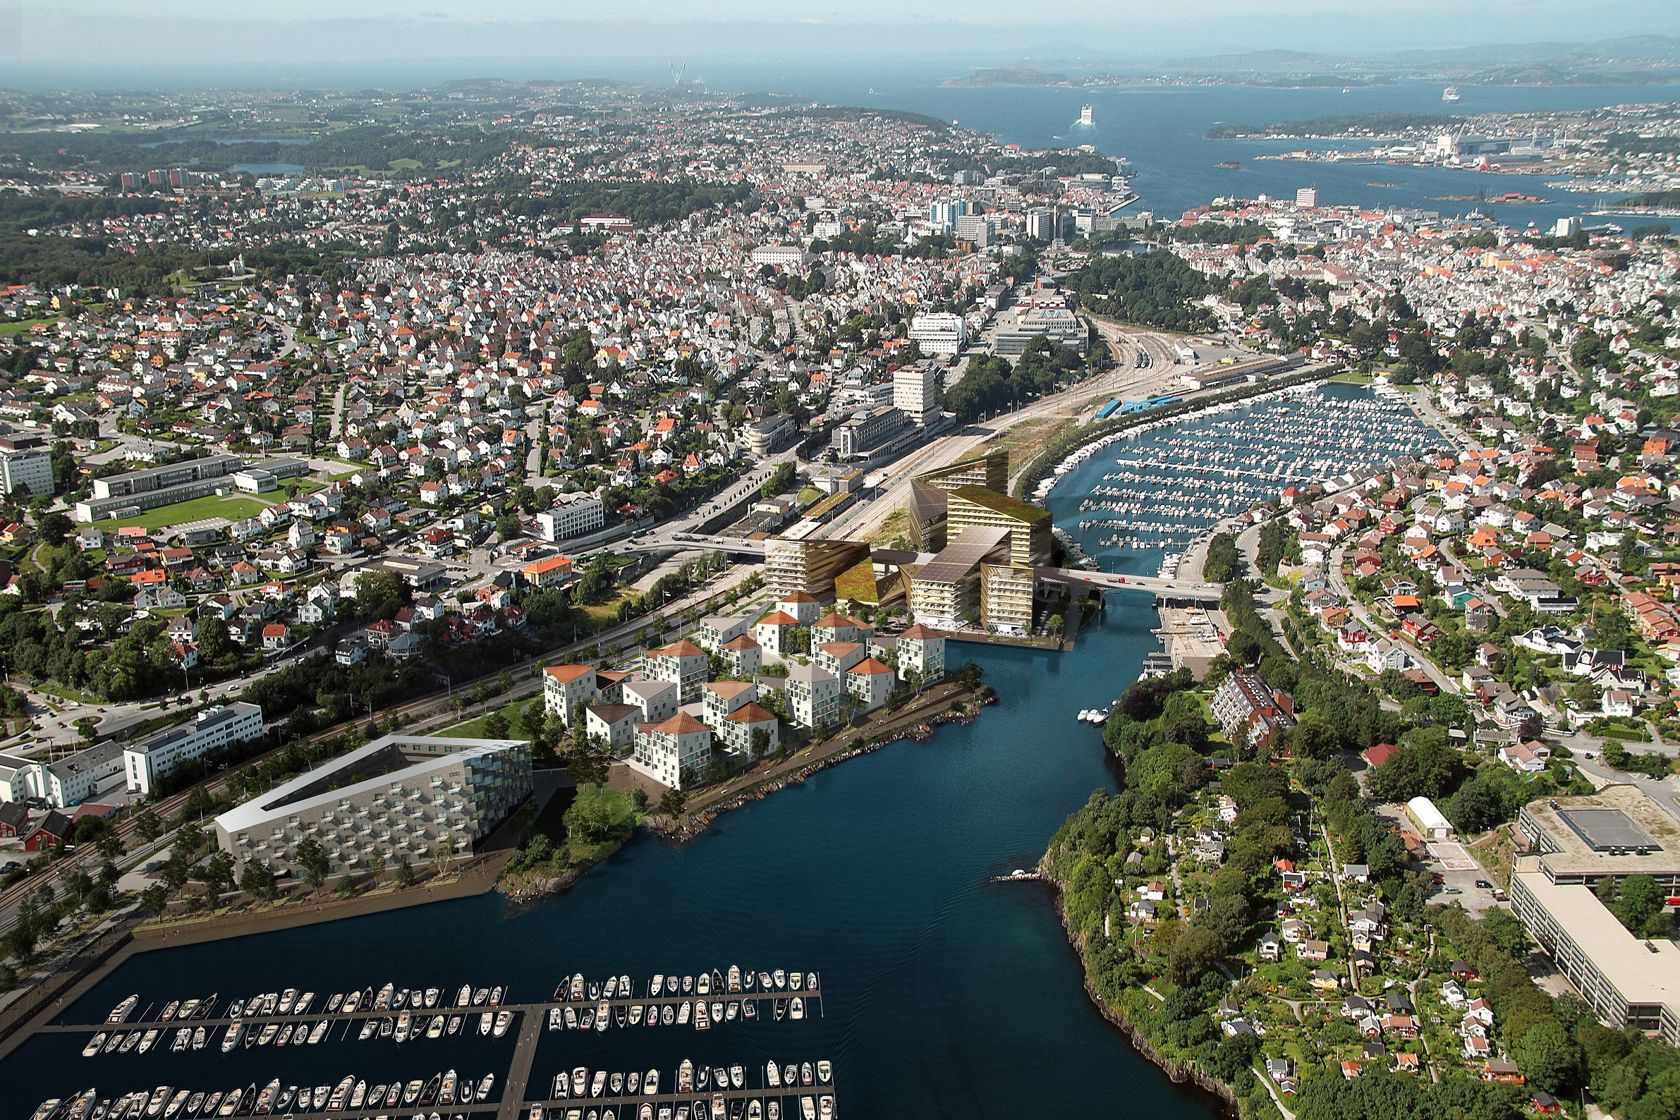 Development of the Paradis area in Stavanger